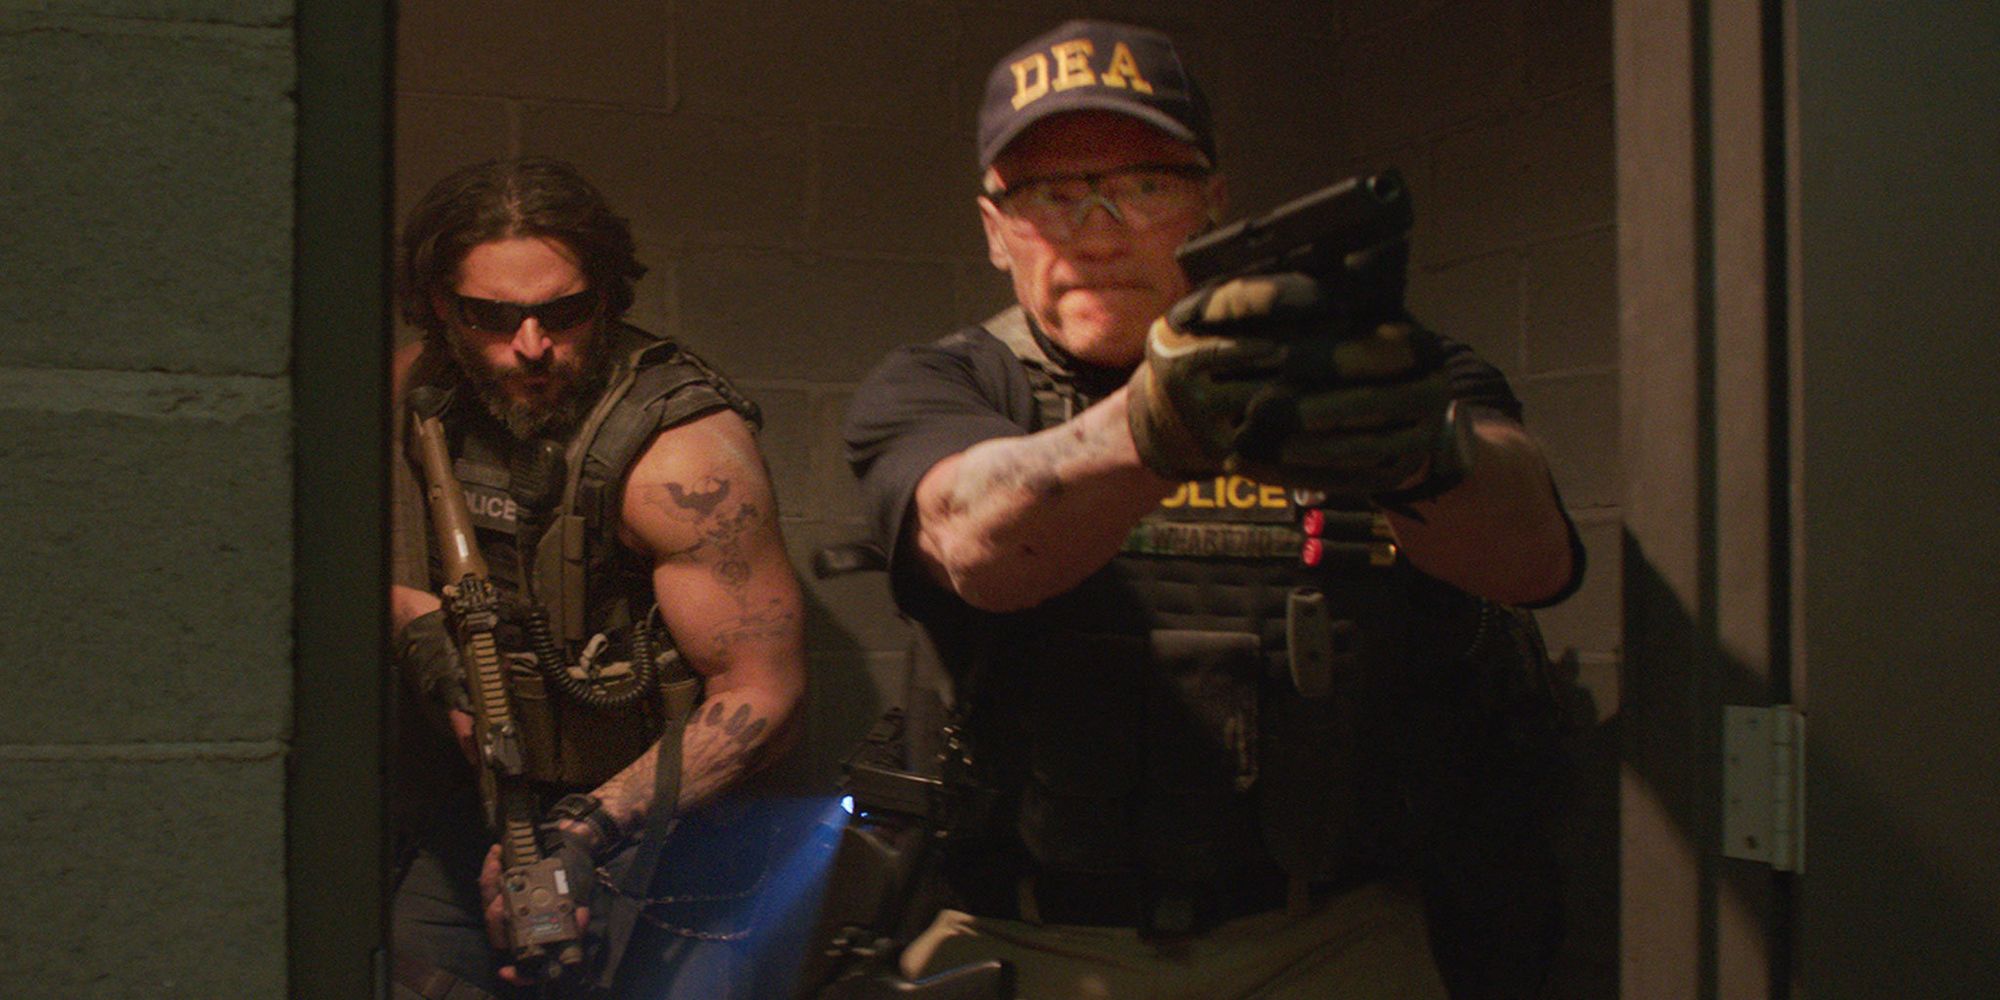 Arnold Schwarzenegger in DEA uniform and firing a gun in Sabotage 